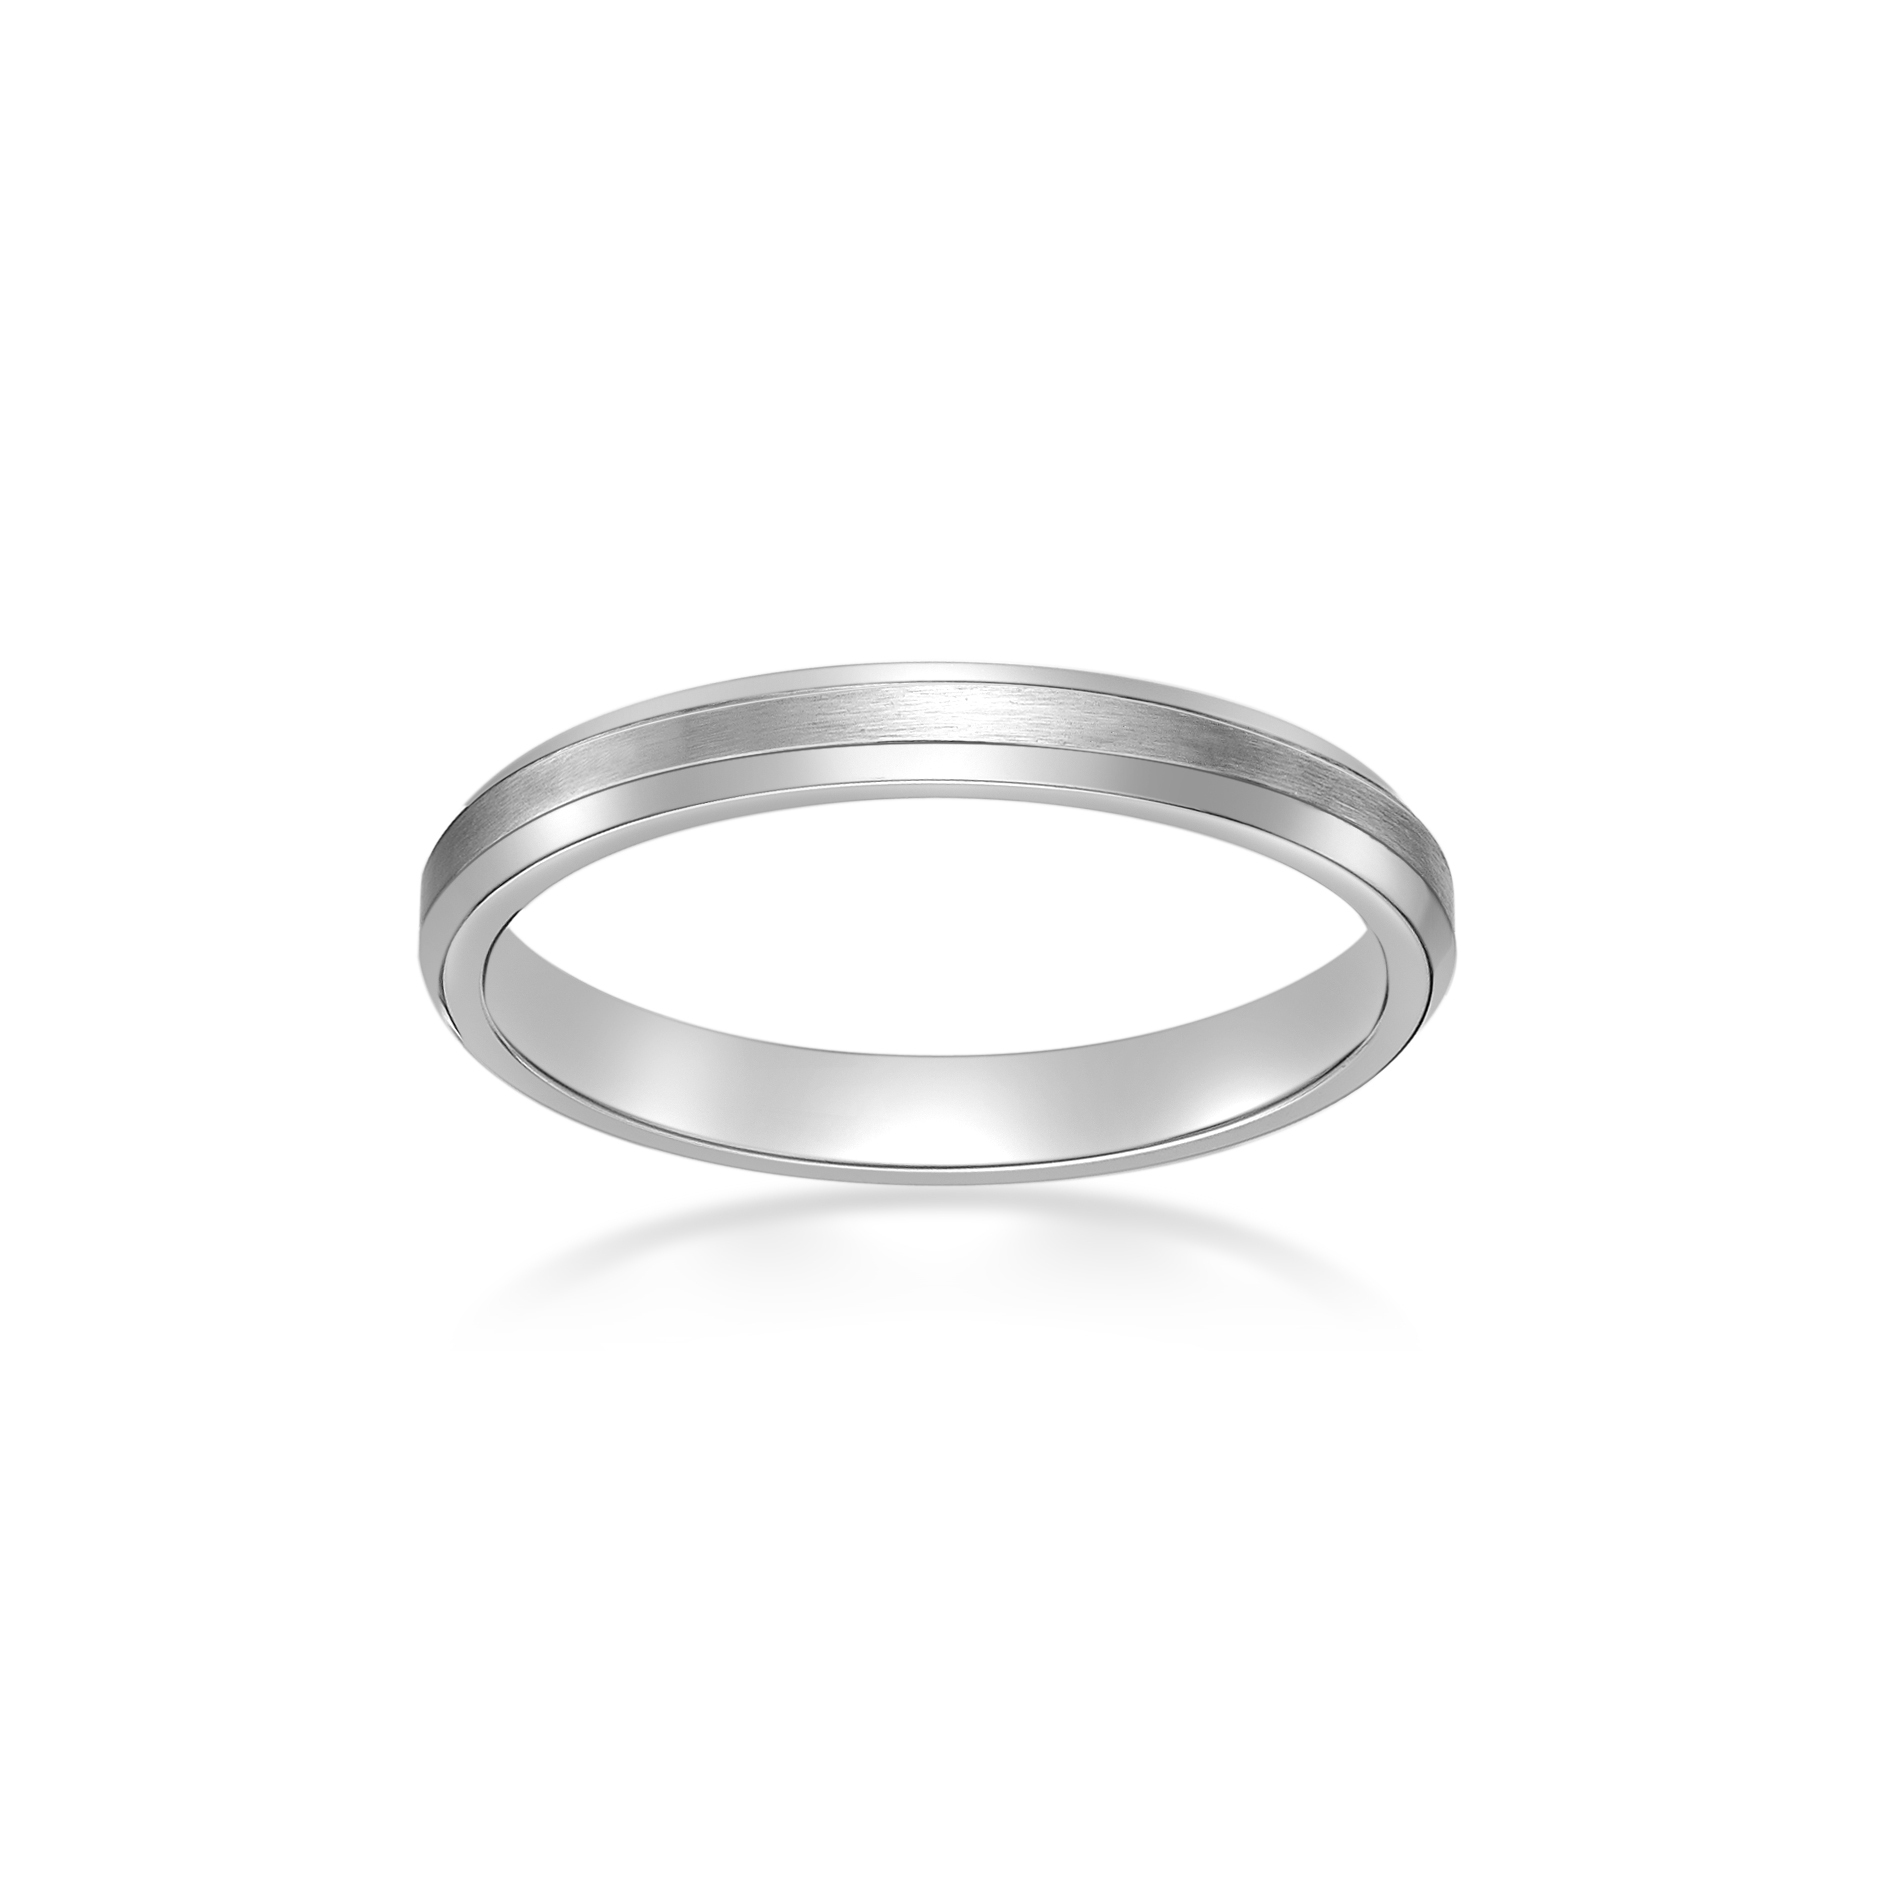 Men's Stainless Steel Beveled Edge Ring - 3MM | Metro Jewelry